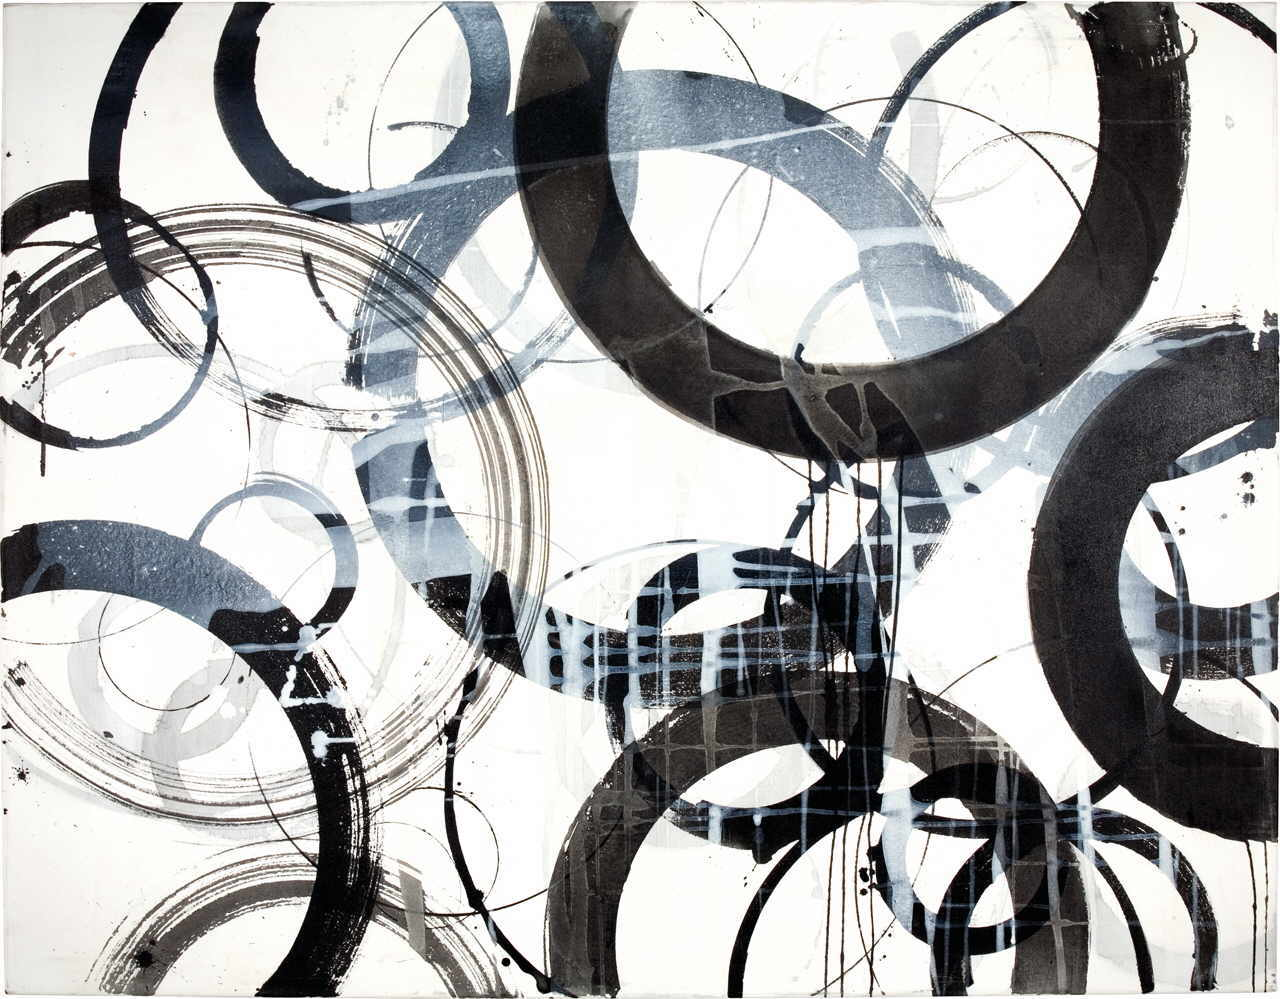 Hoefert Wolf D. 
"Multiball #41", 2007
mixed media / canvas
105 x 135 cm